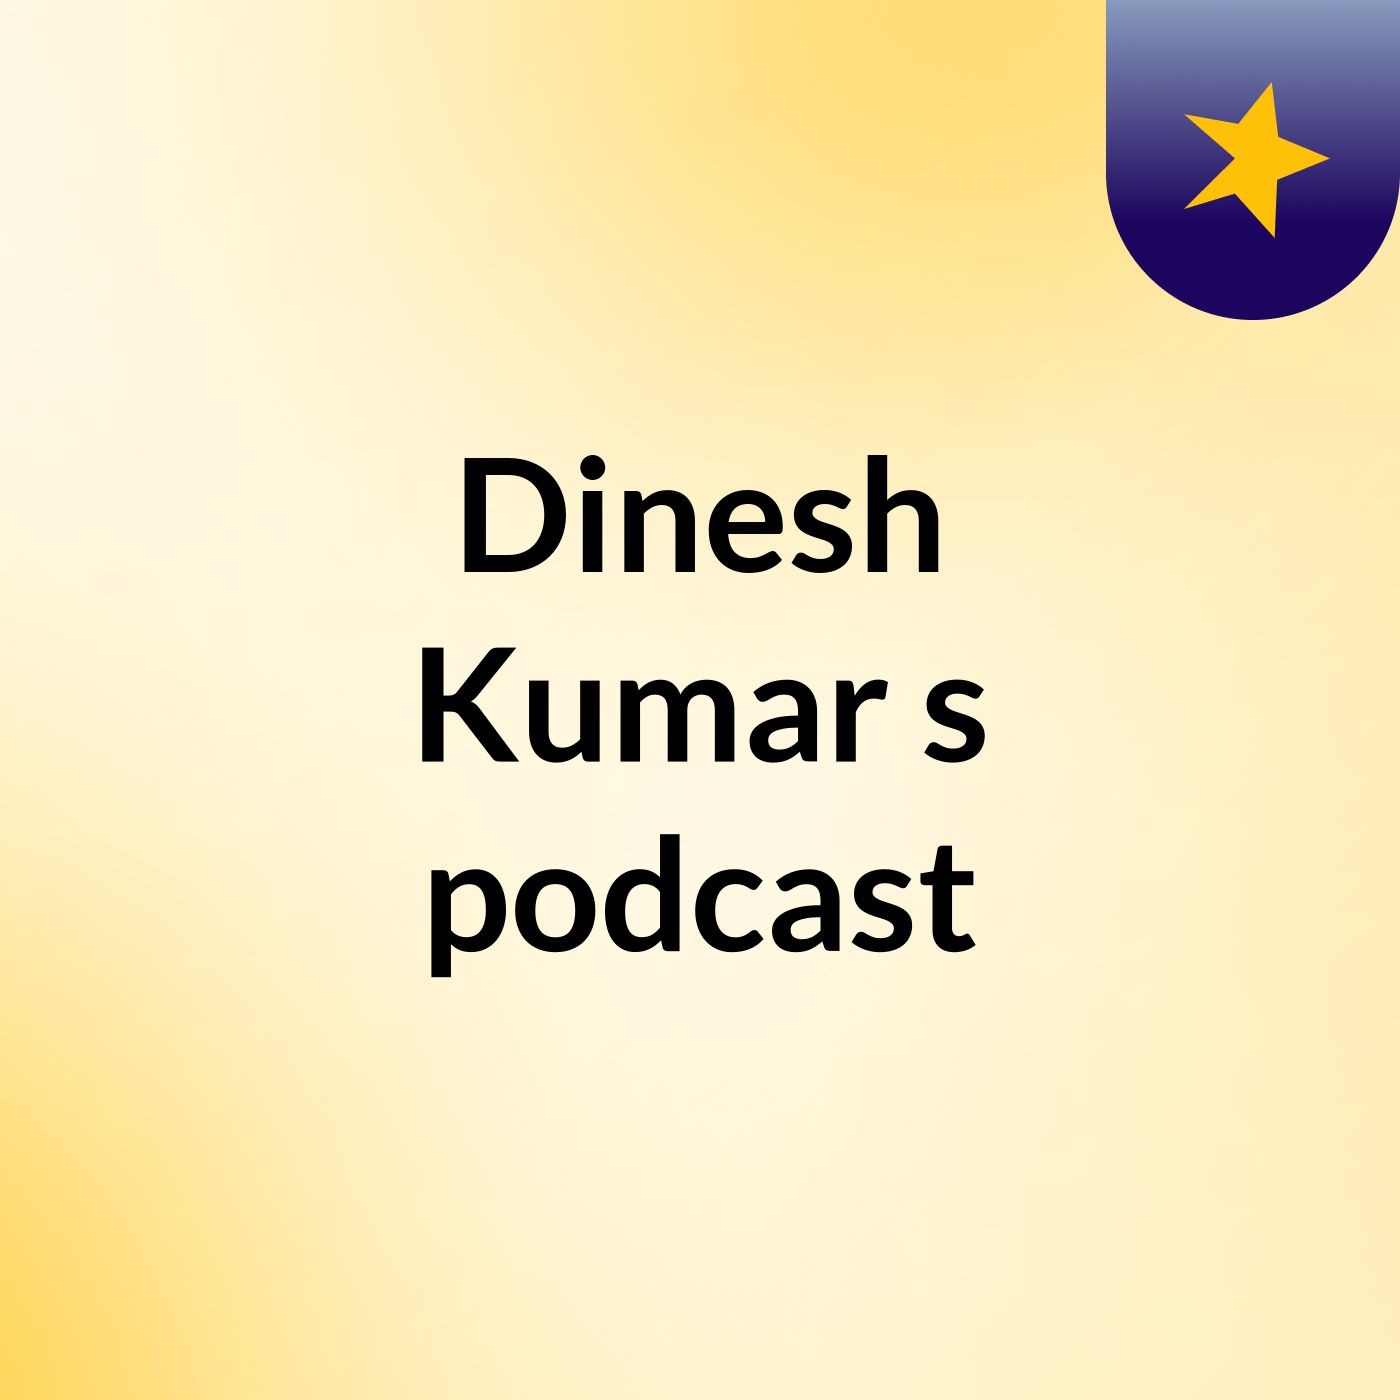 Dinesh Kumar's podcast